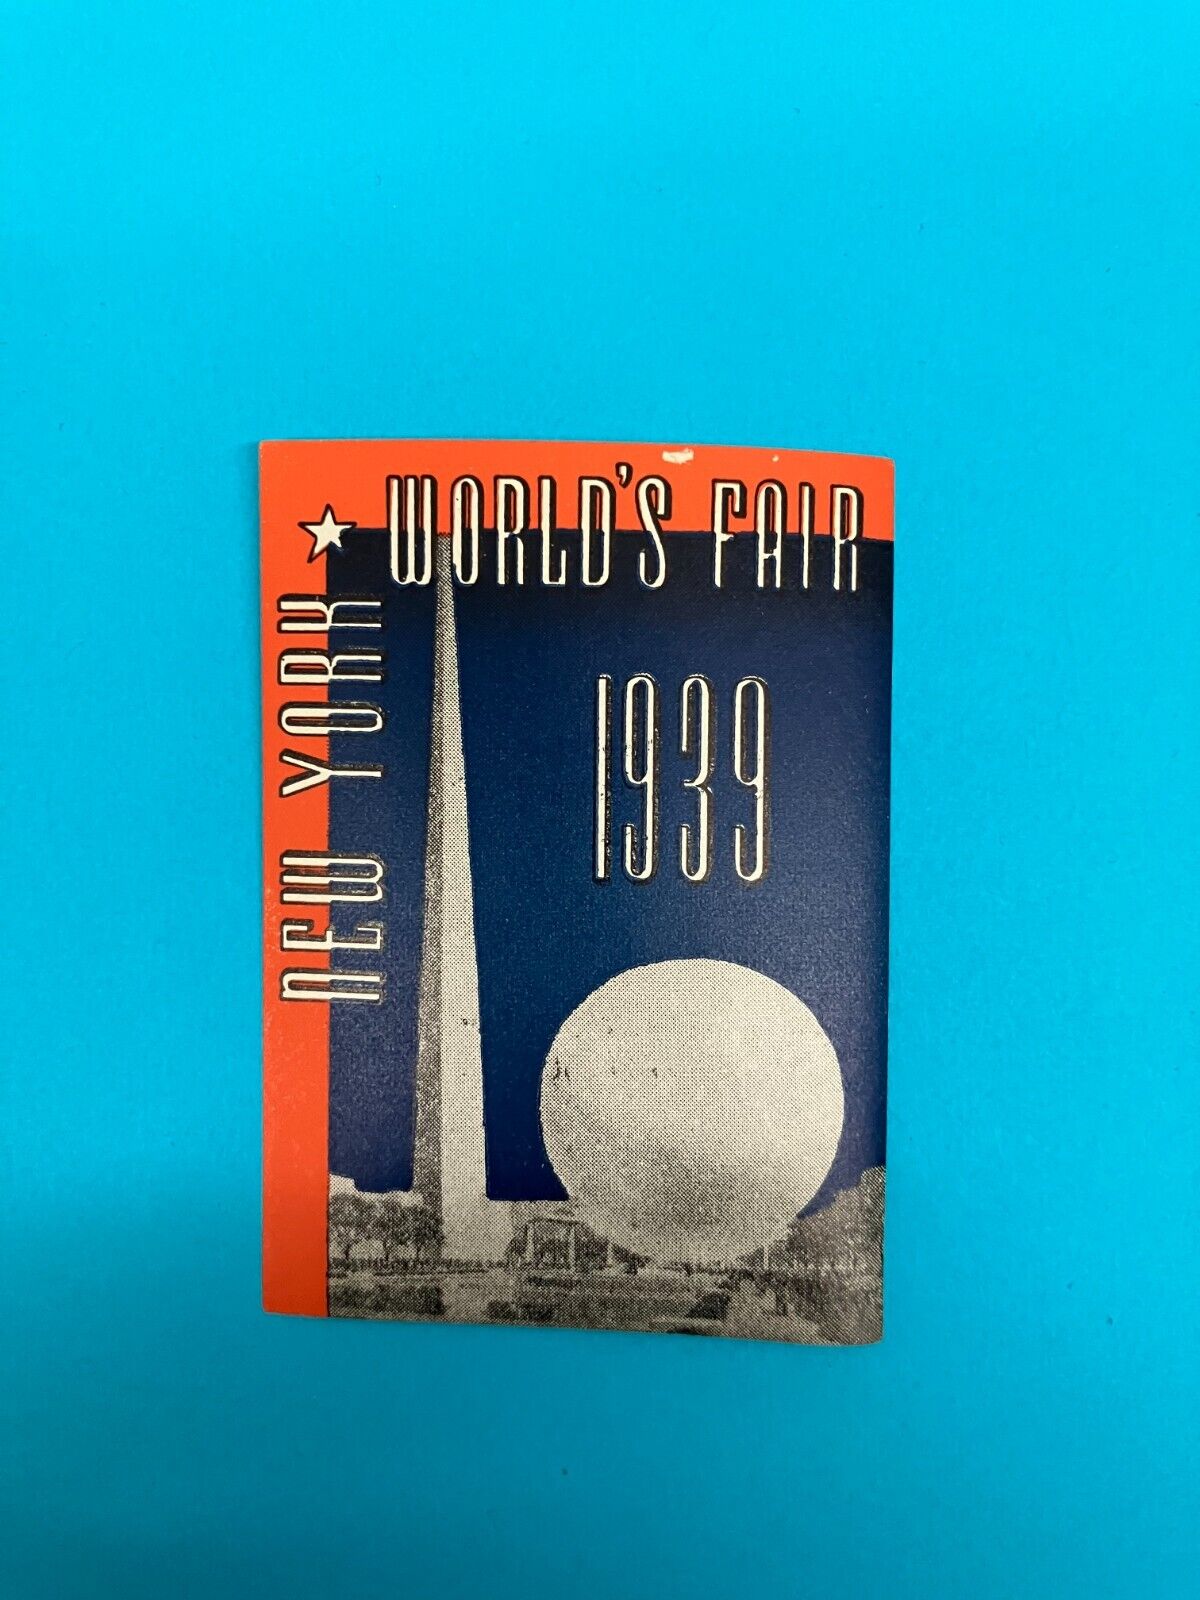 Vintage World's Fair Label-World's Fair Label-1939